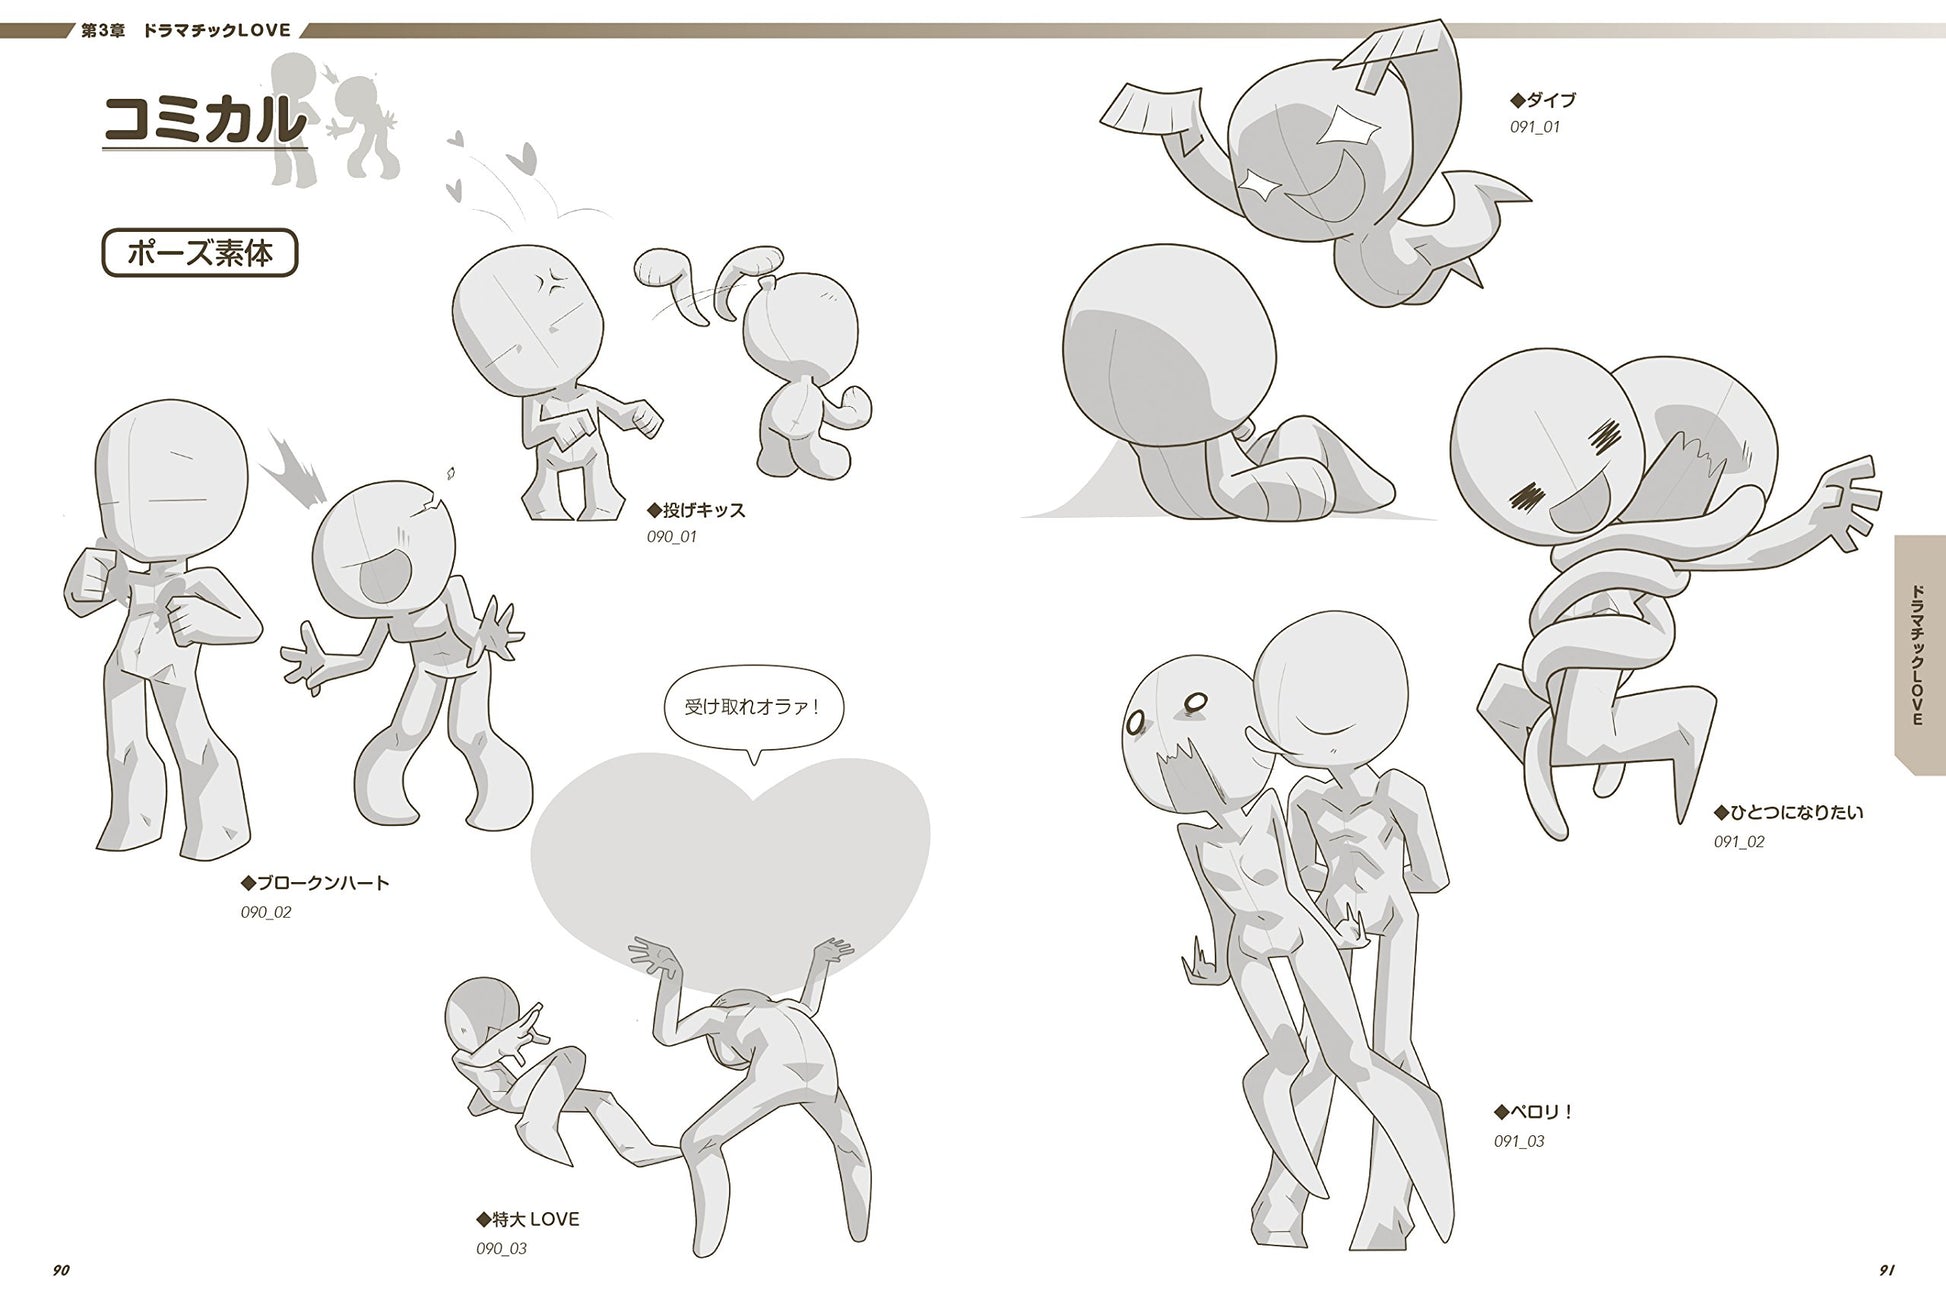 New How to Draw Anime Manga Super Deformed Pose Chibi Chara ver. Art Book